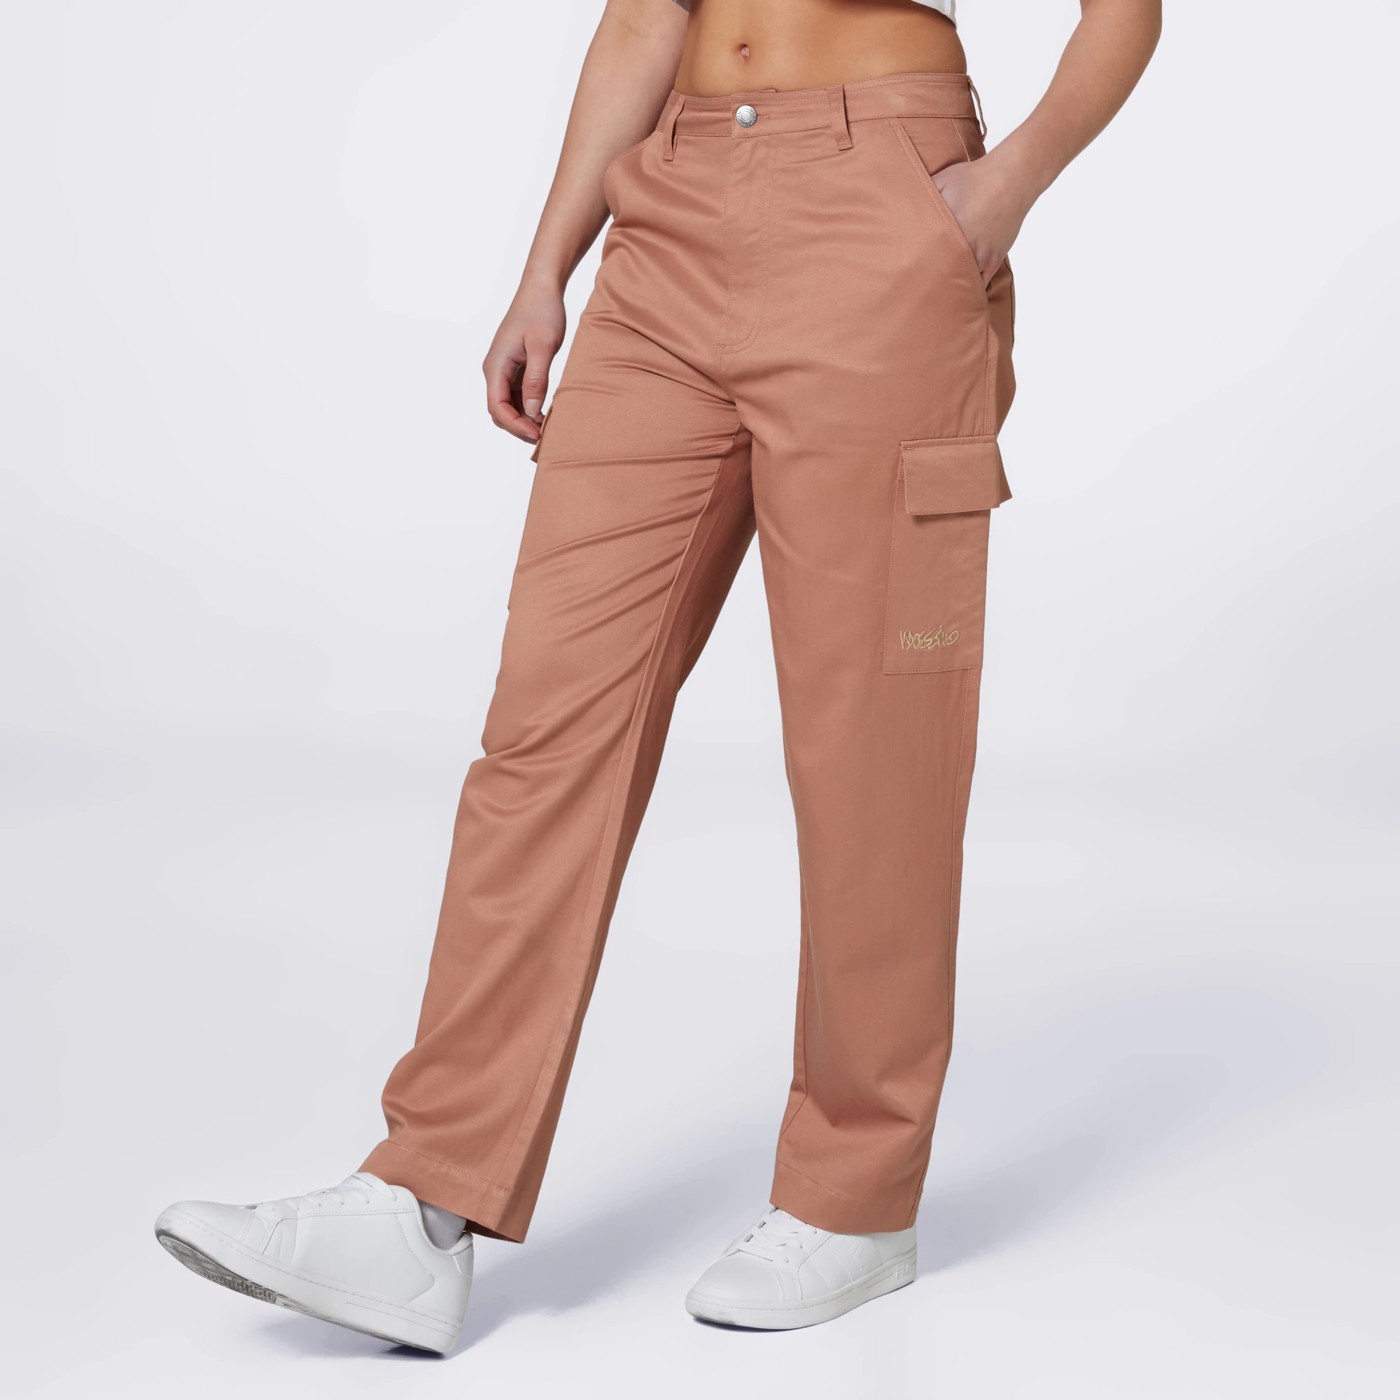 Mossimo Lana Cargo Pants